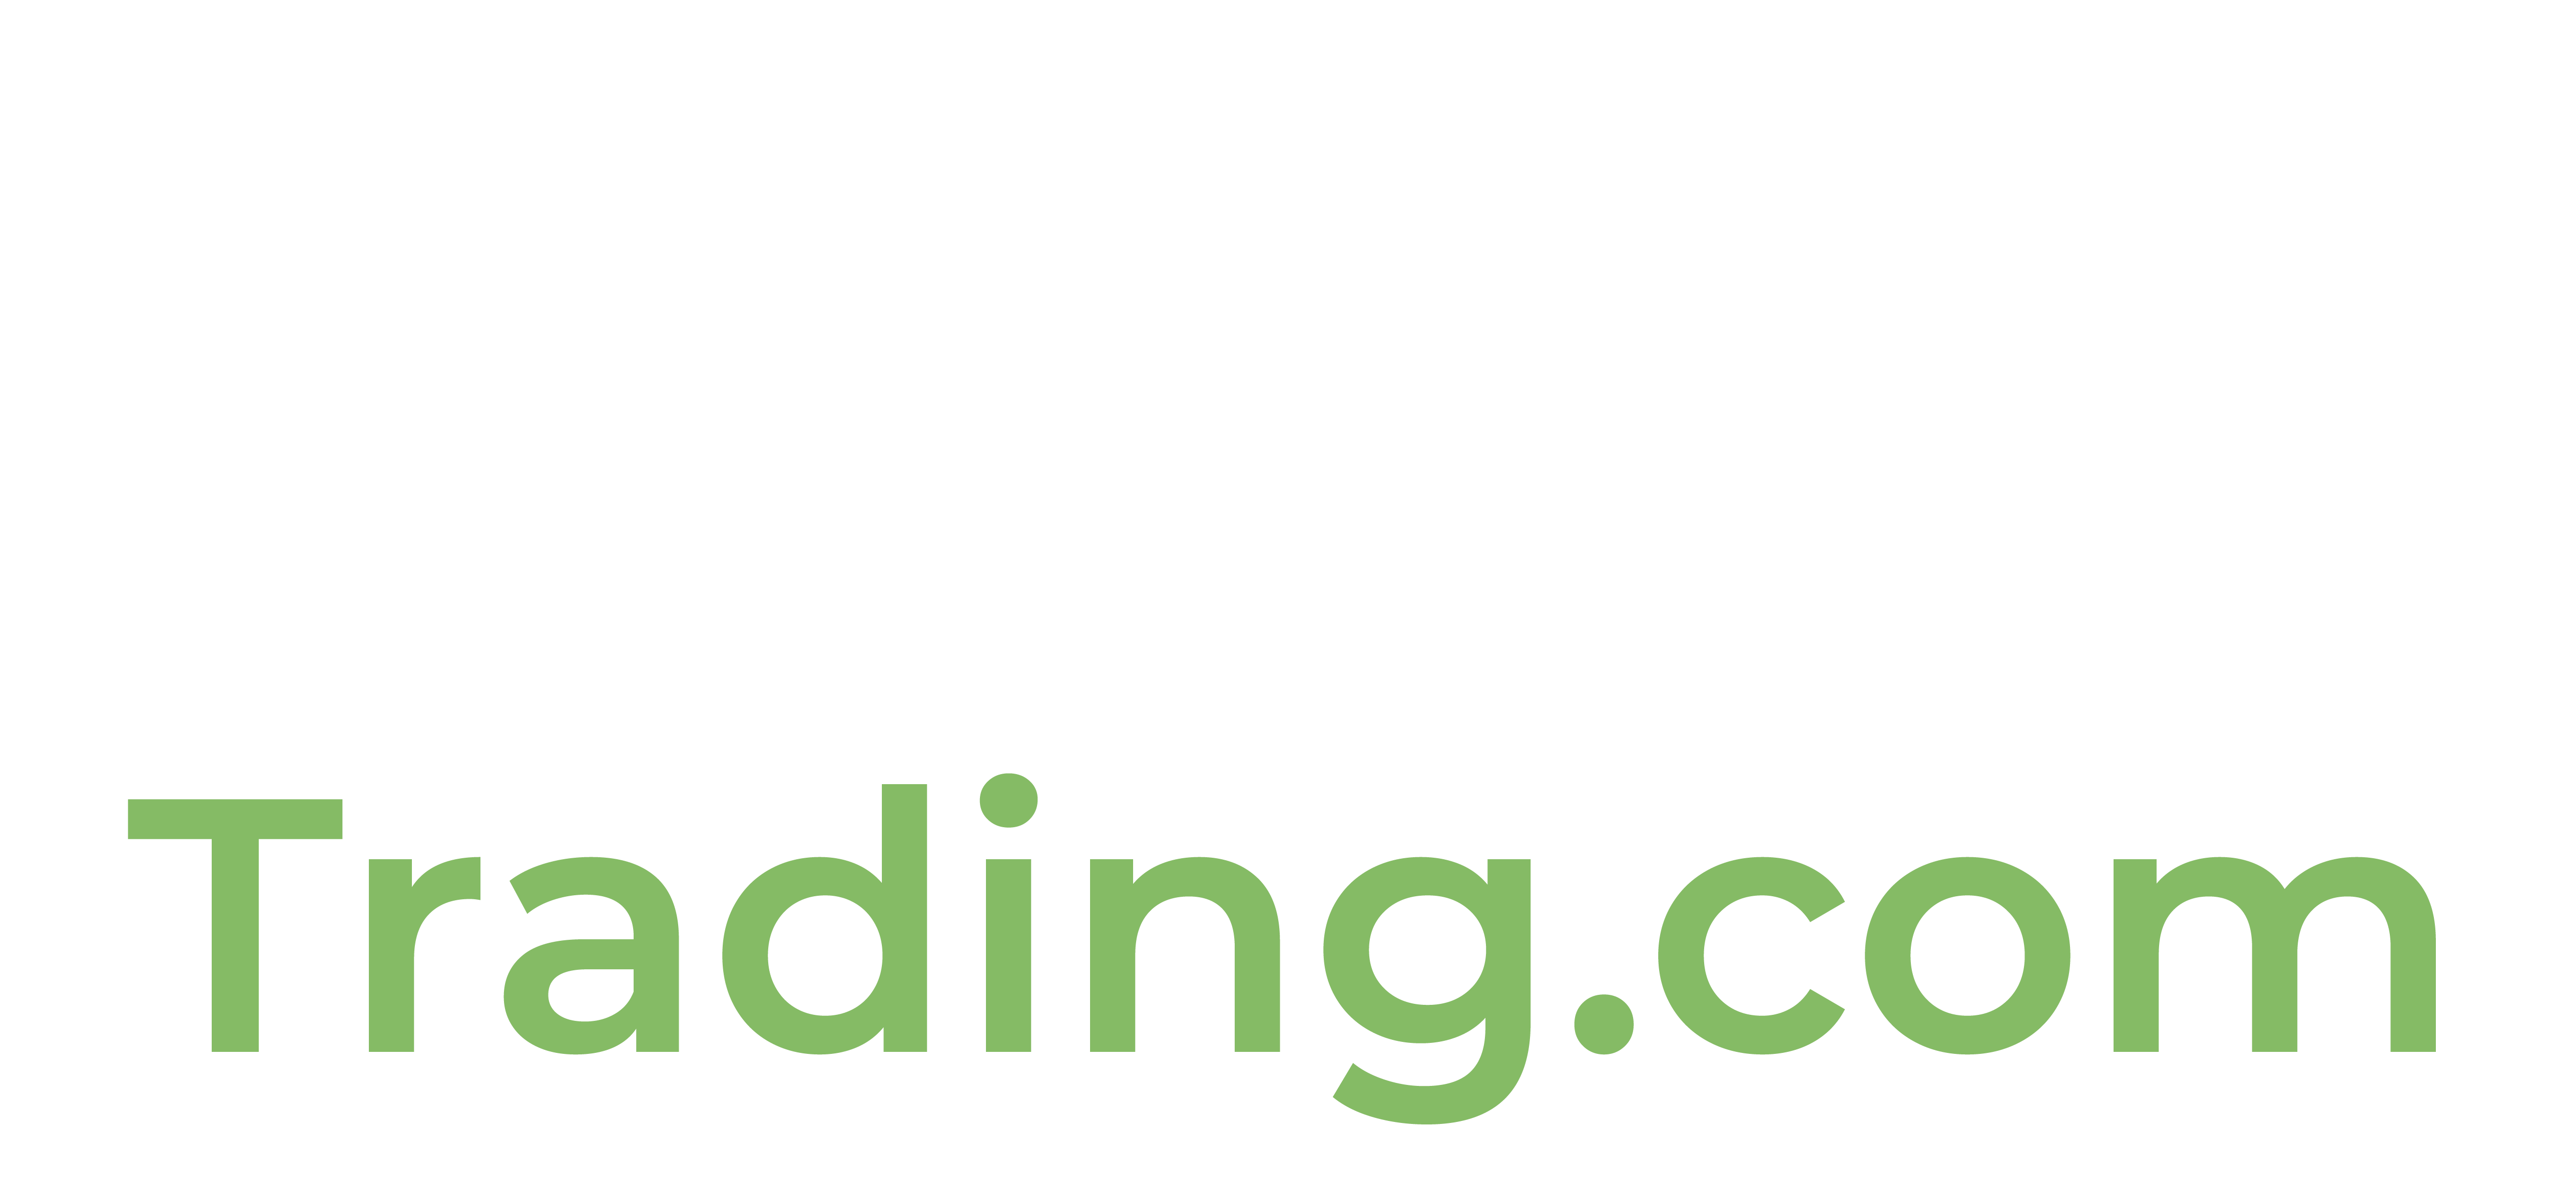 DCX24 Trading